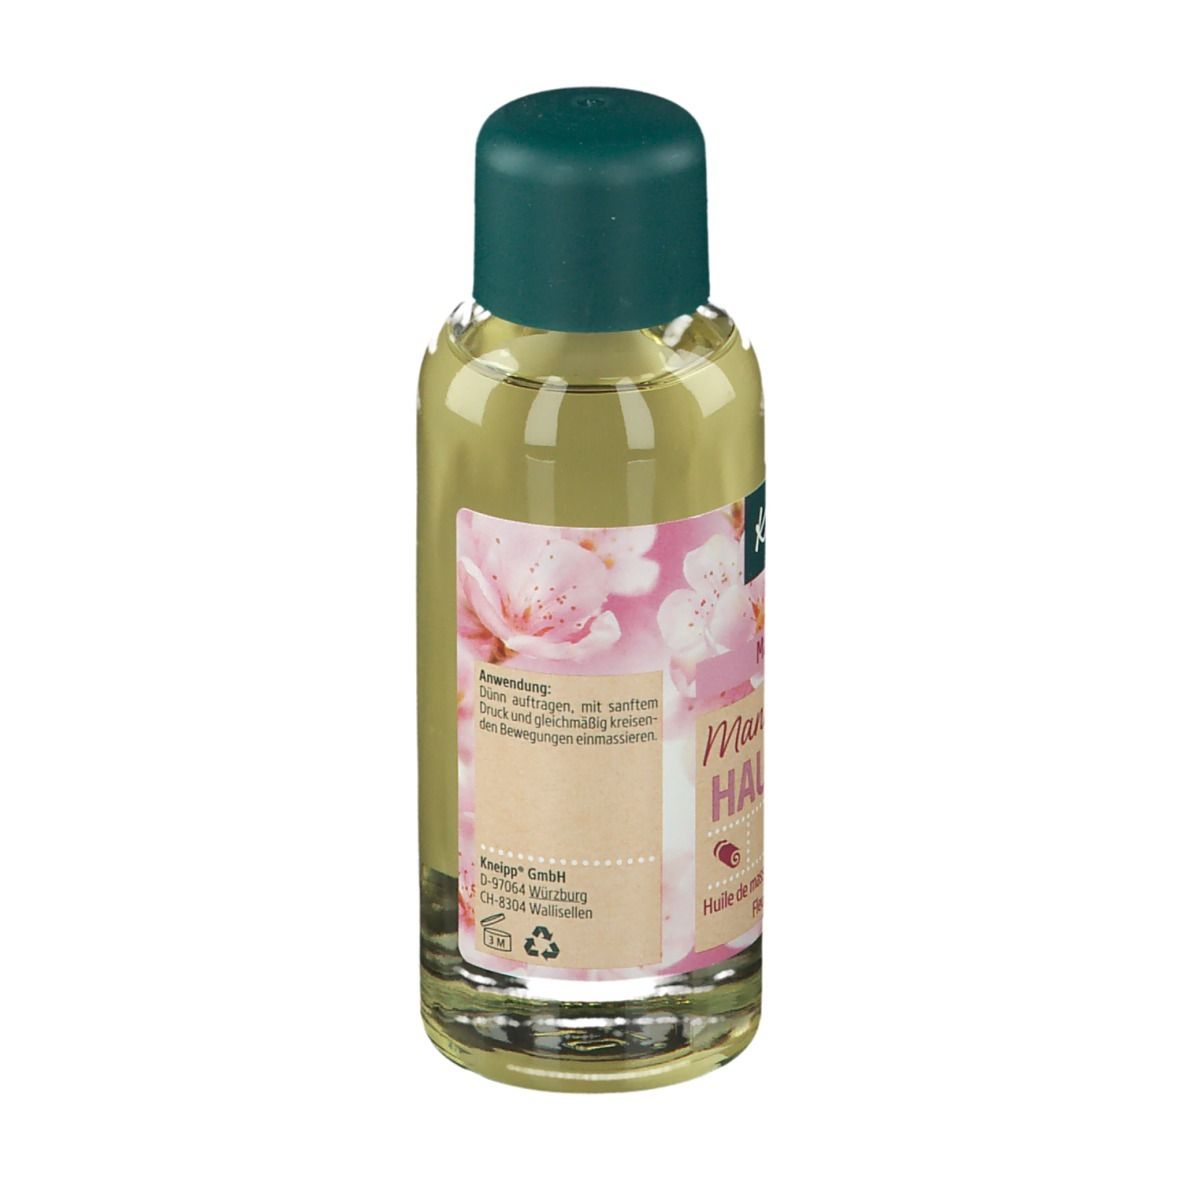 Kneipp® Pflegendes Massage-Öl Mandelblüten Hautzart